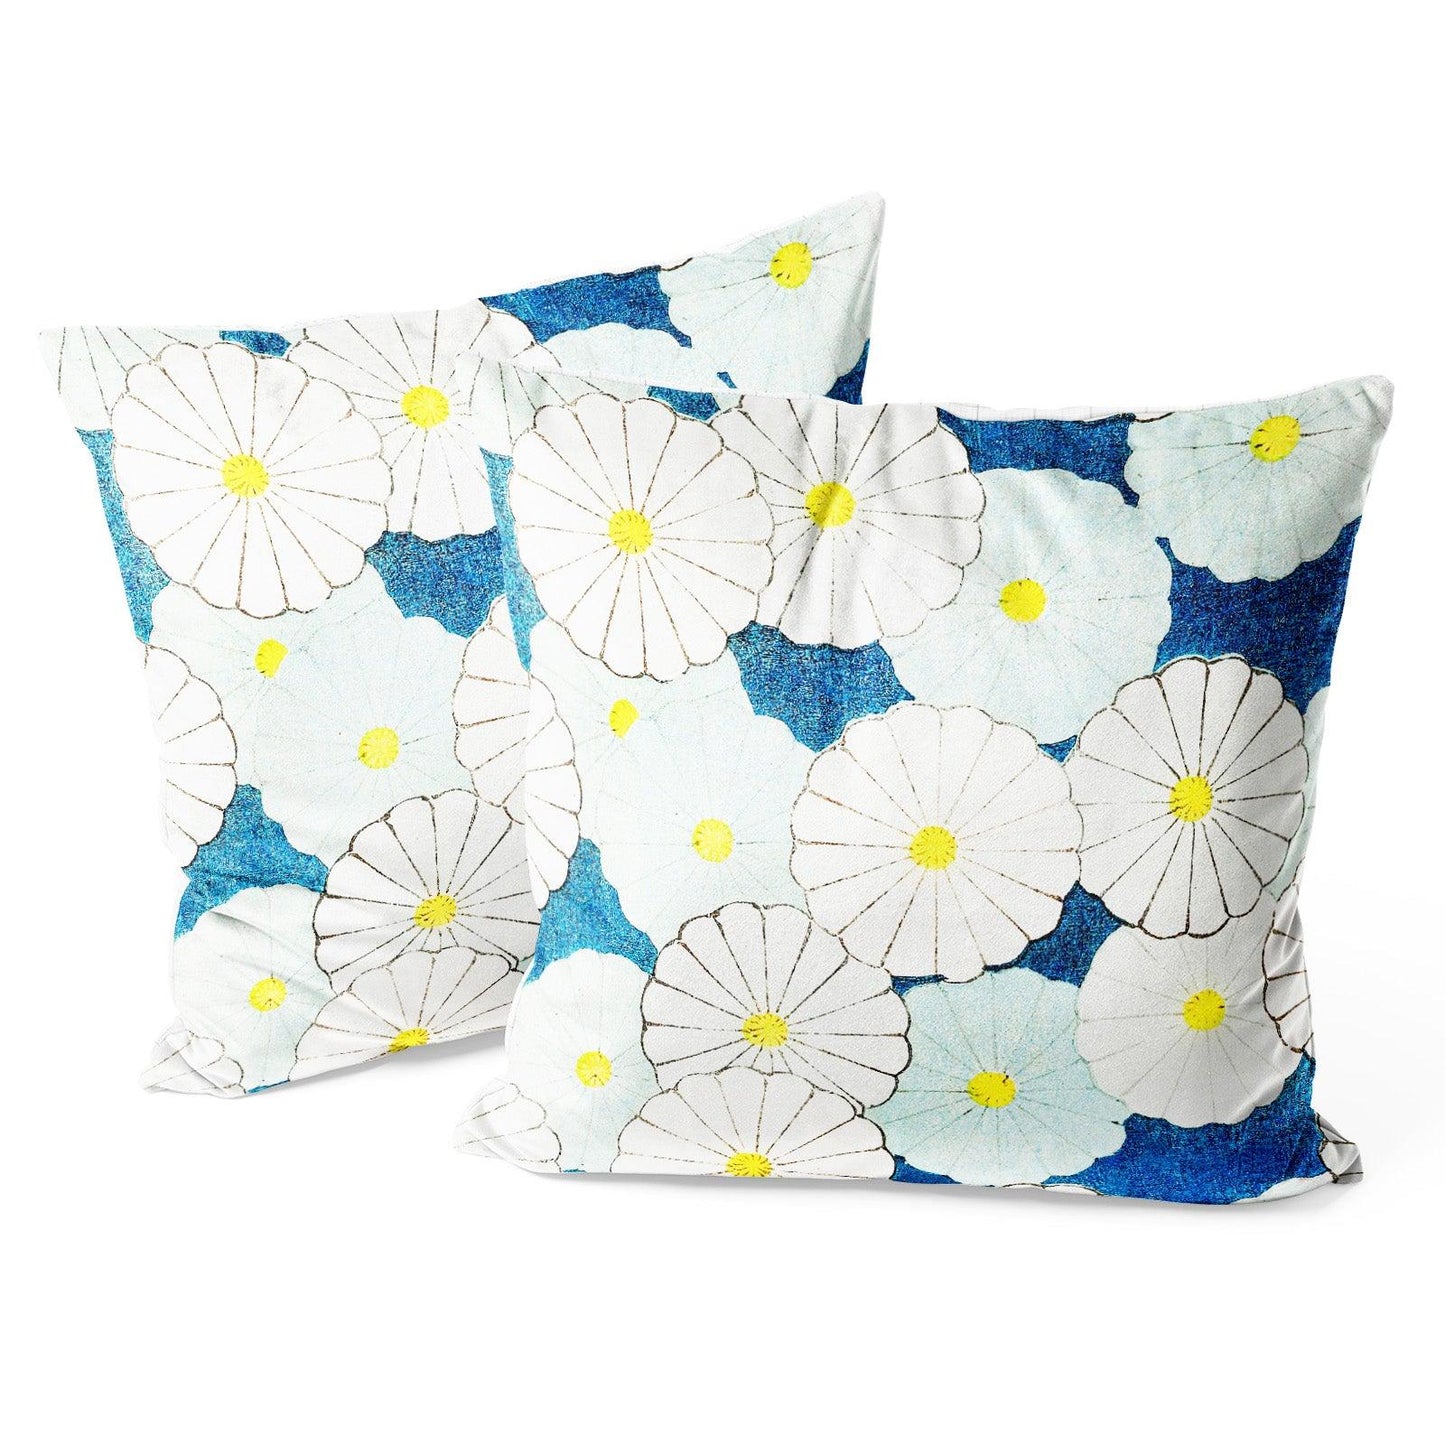 Art Flower Throw Pillow Covers Pack of 2 18x18 Inch (Blue Chrysanthemum by Korin Furuya) - Berkin Arts